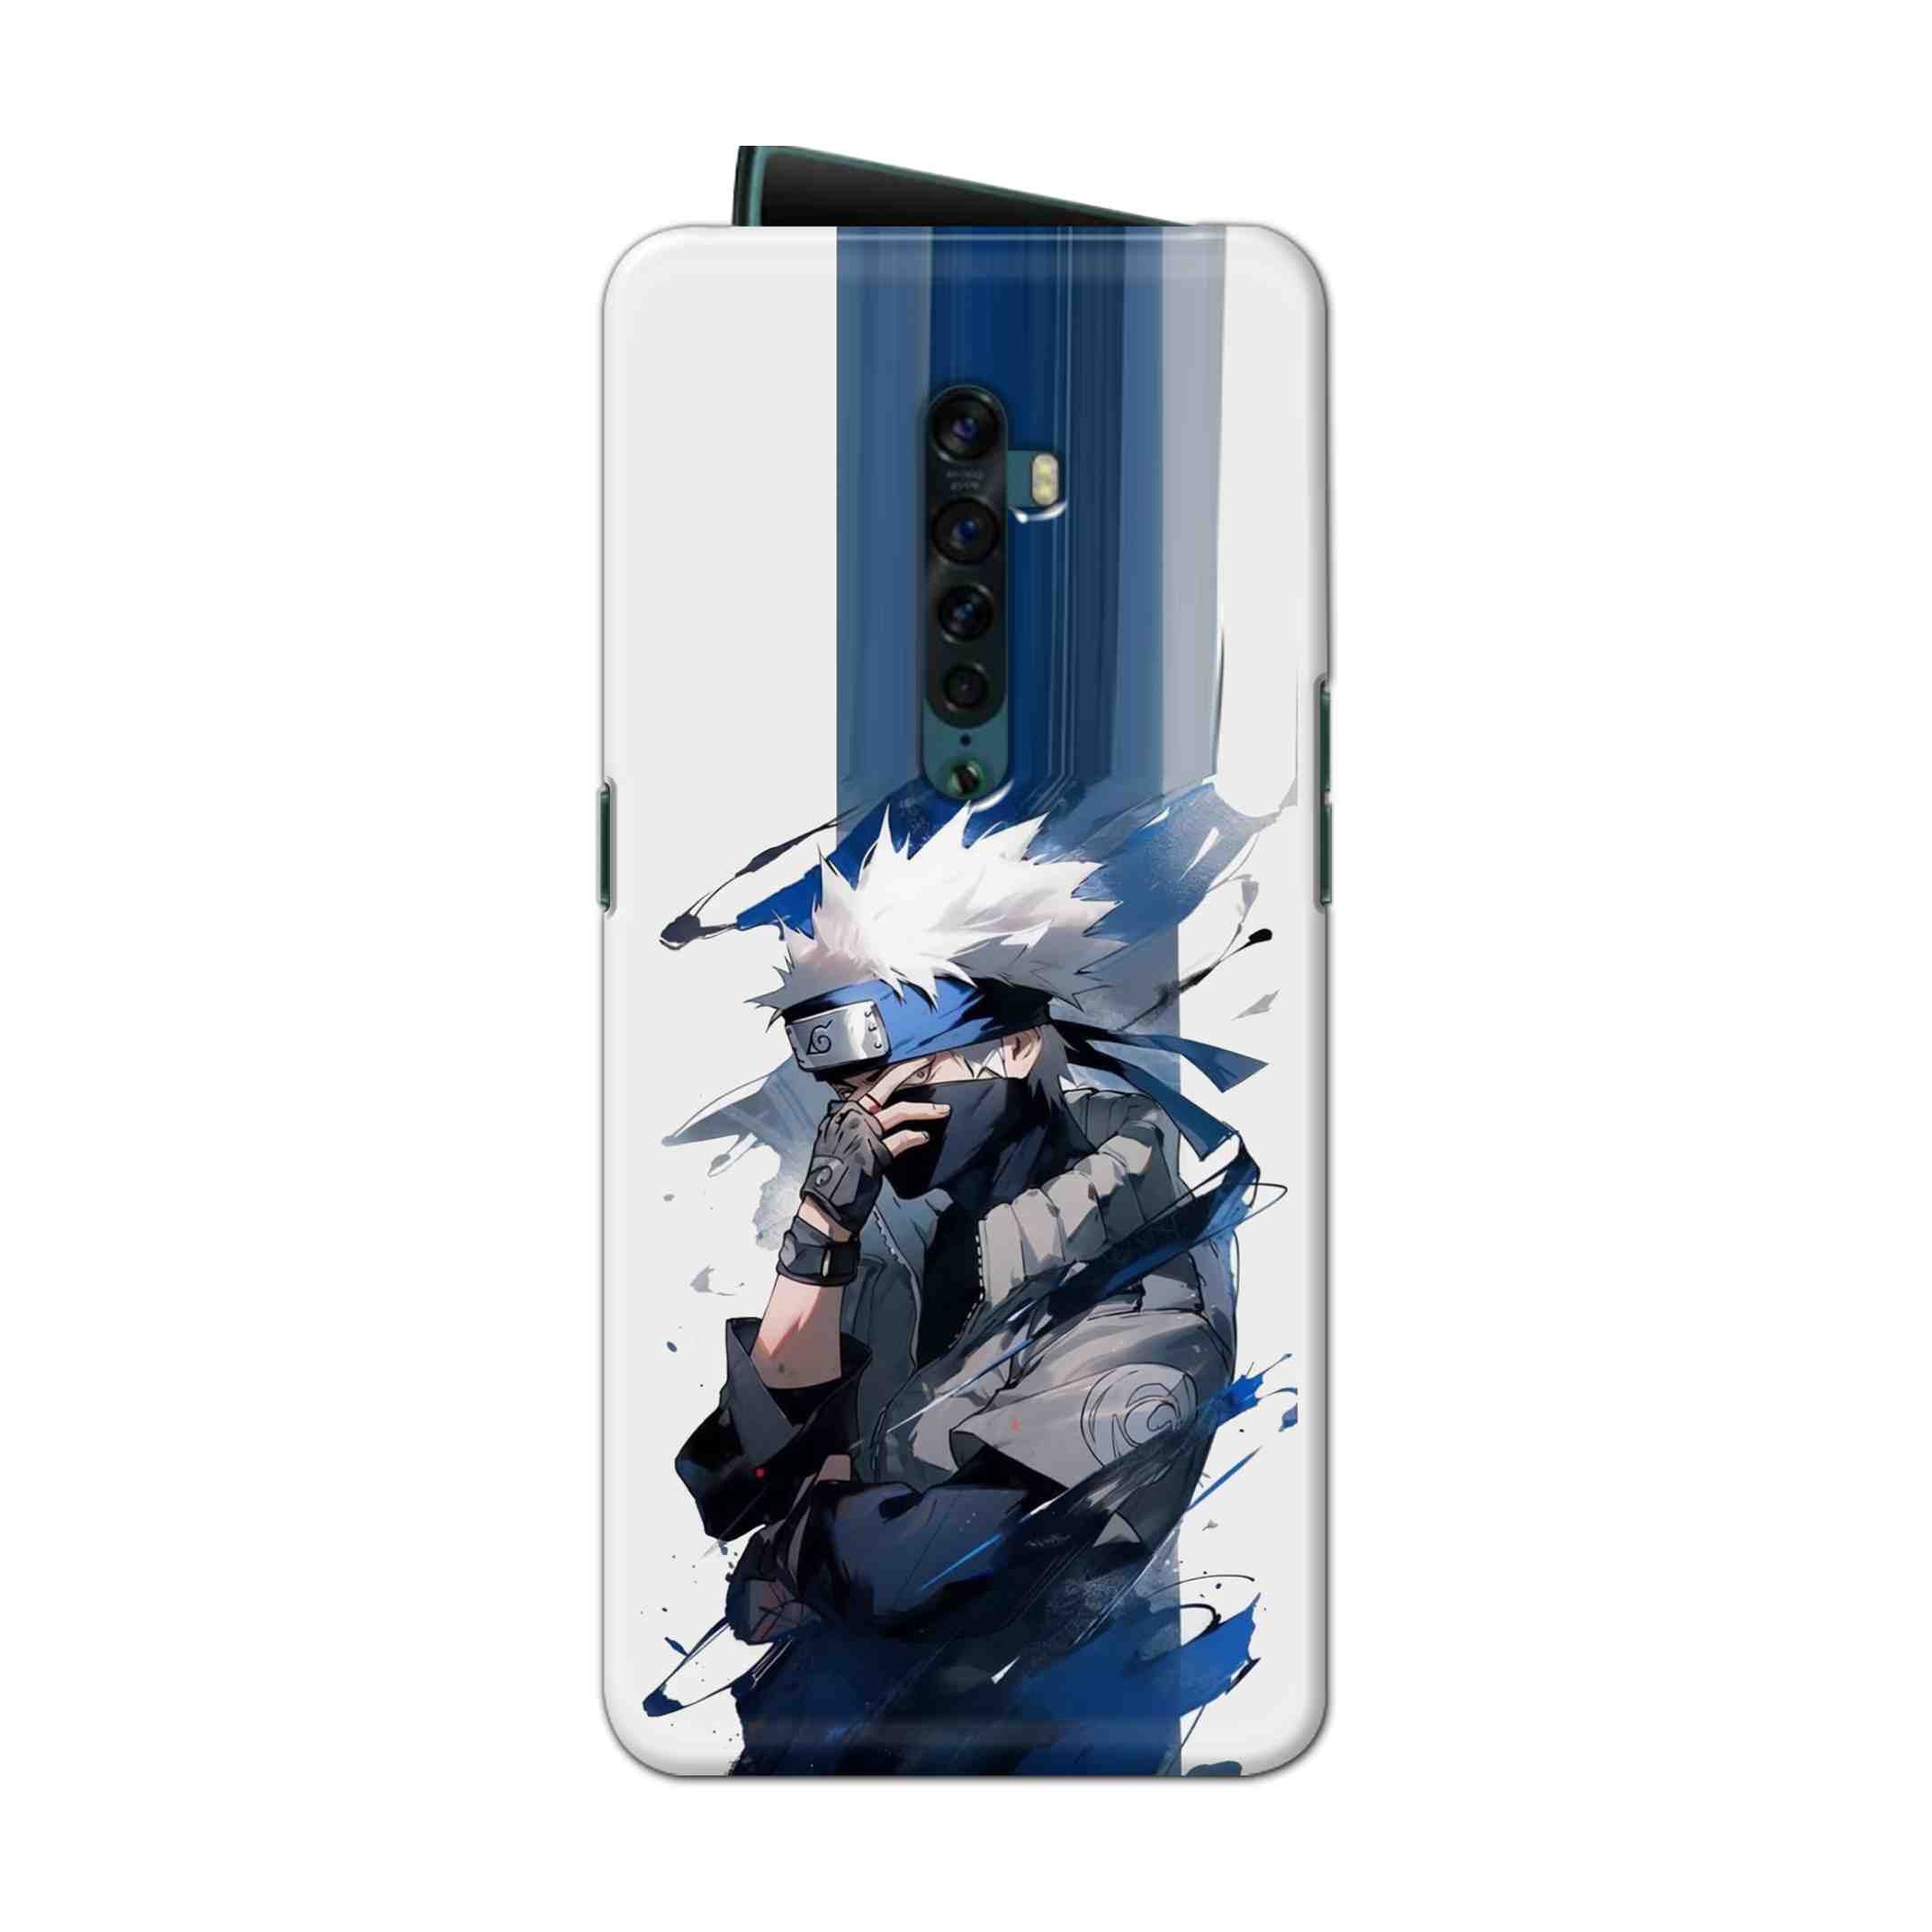 Buy Kakachi Hard Back Mobile Phone Case Cover For Oppo Reno 2 Online